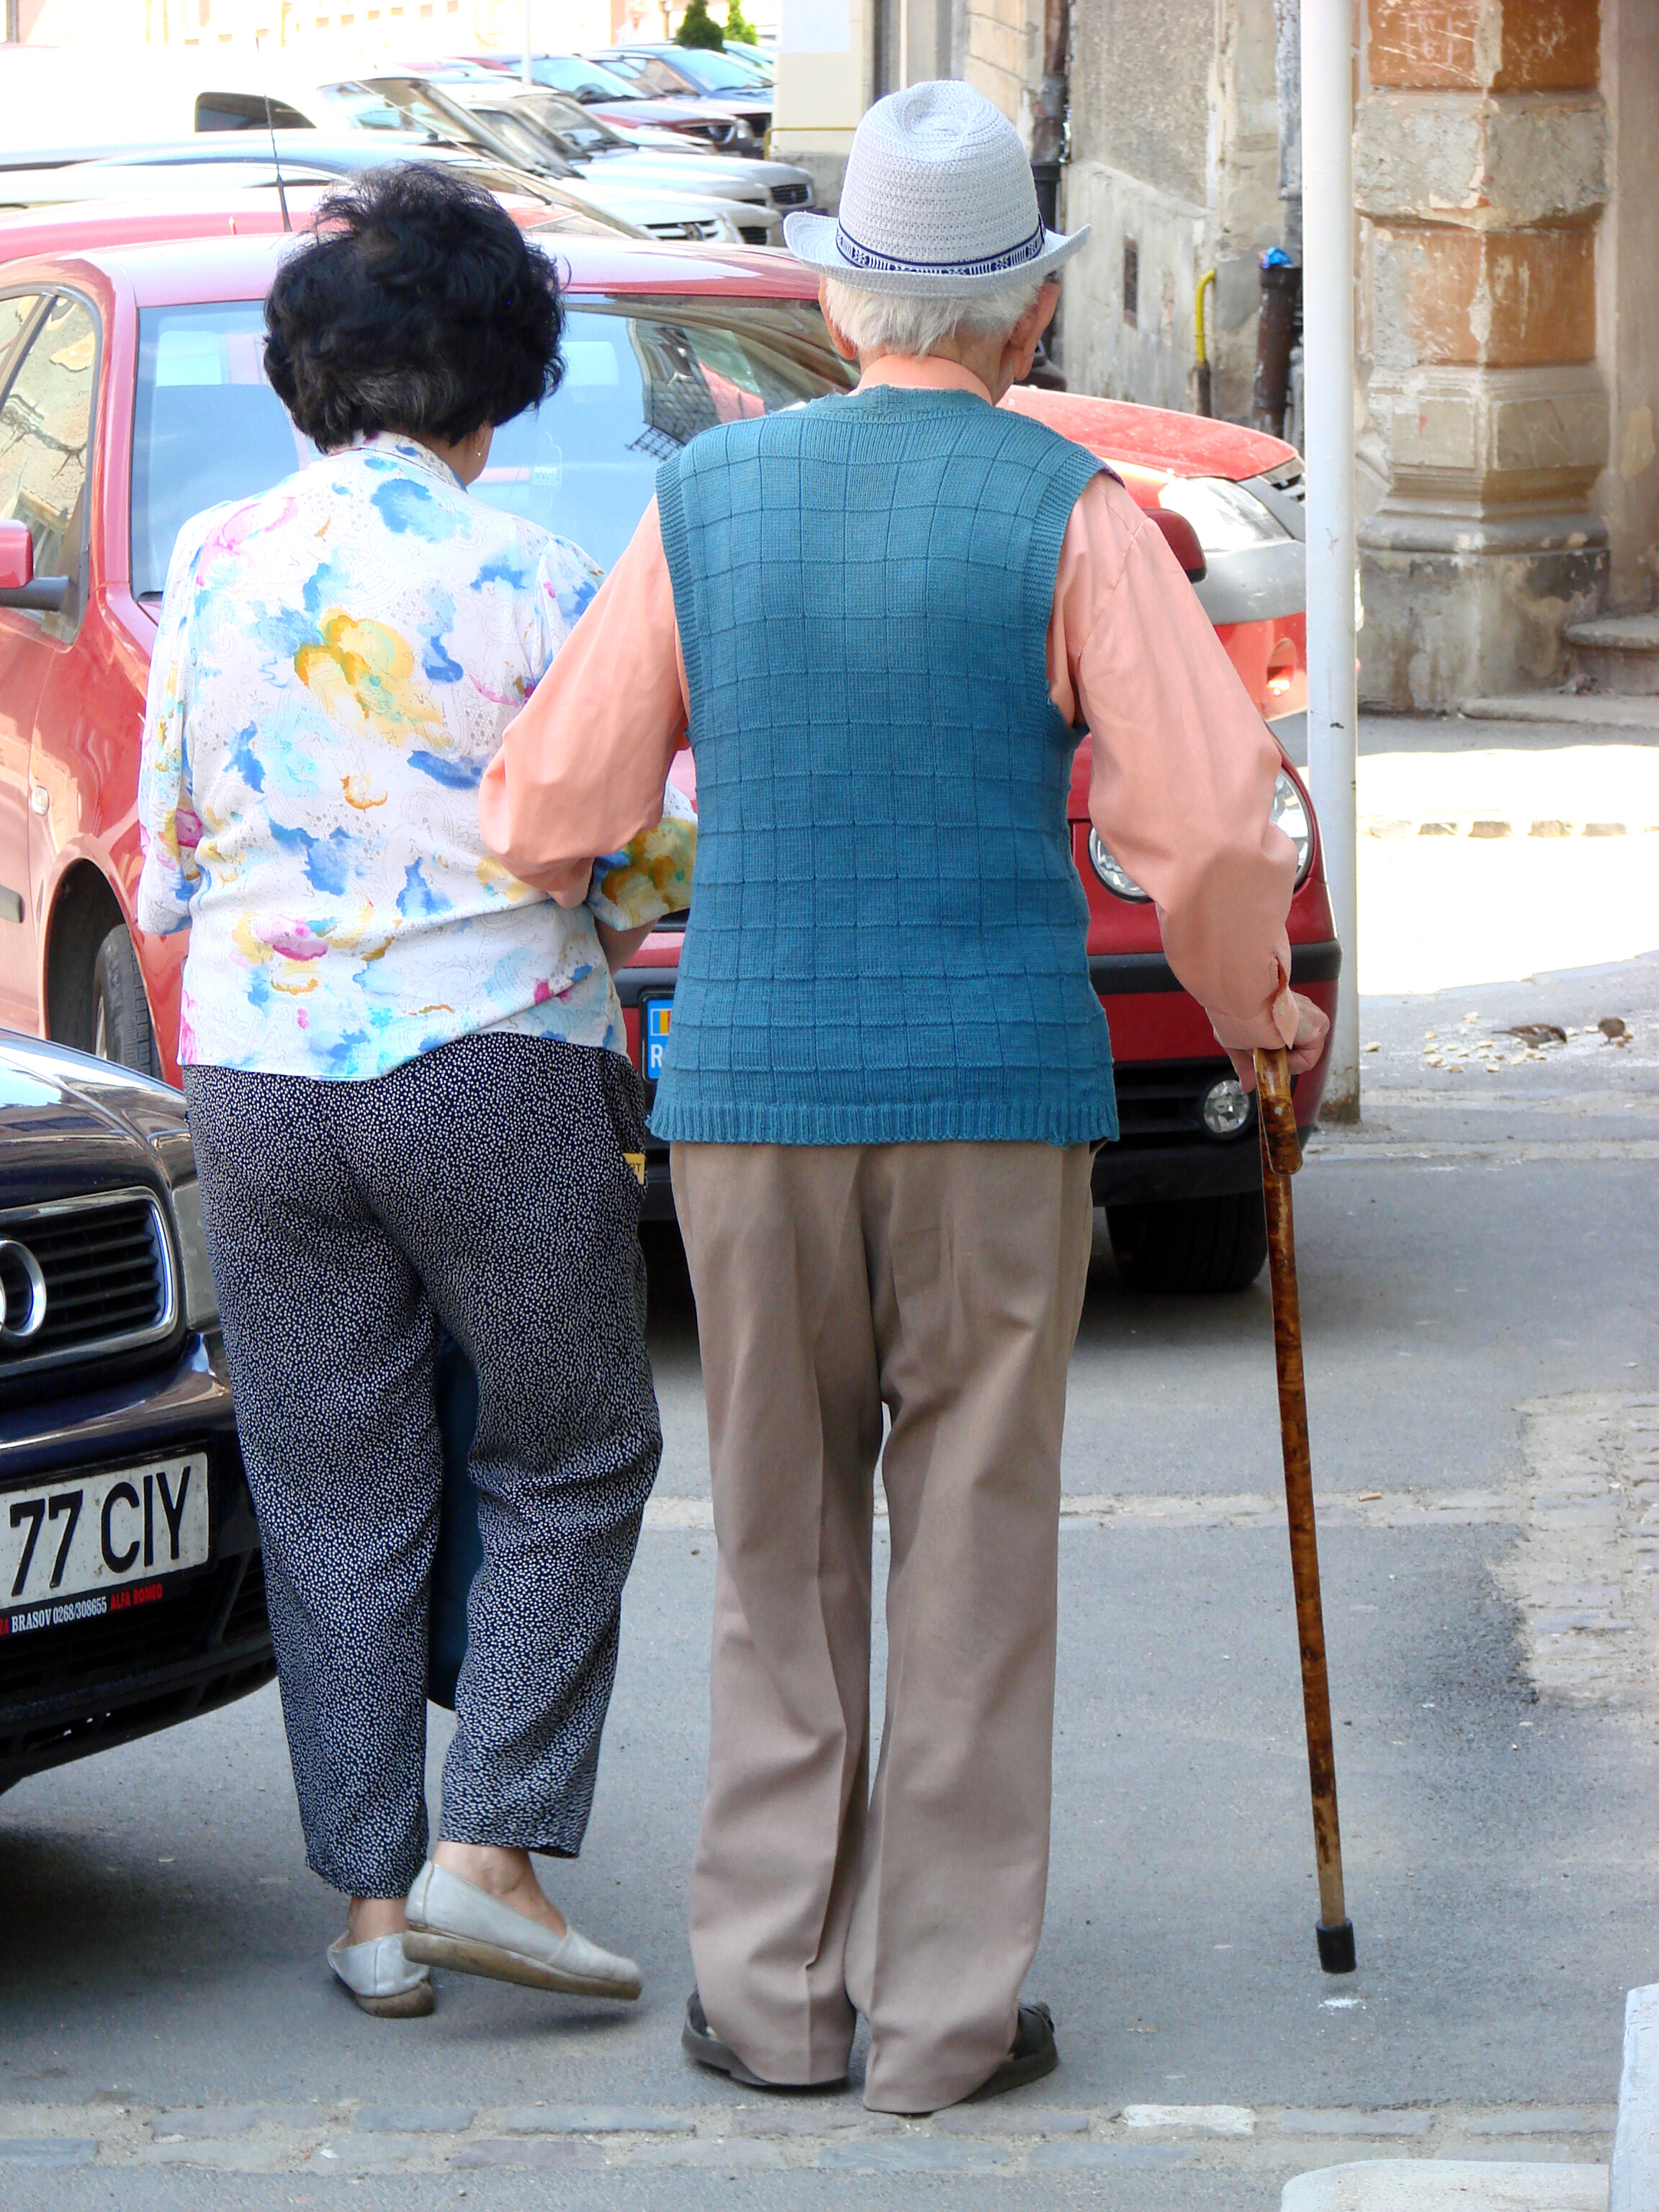 An elderly couple. In Romania.